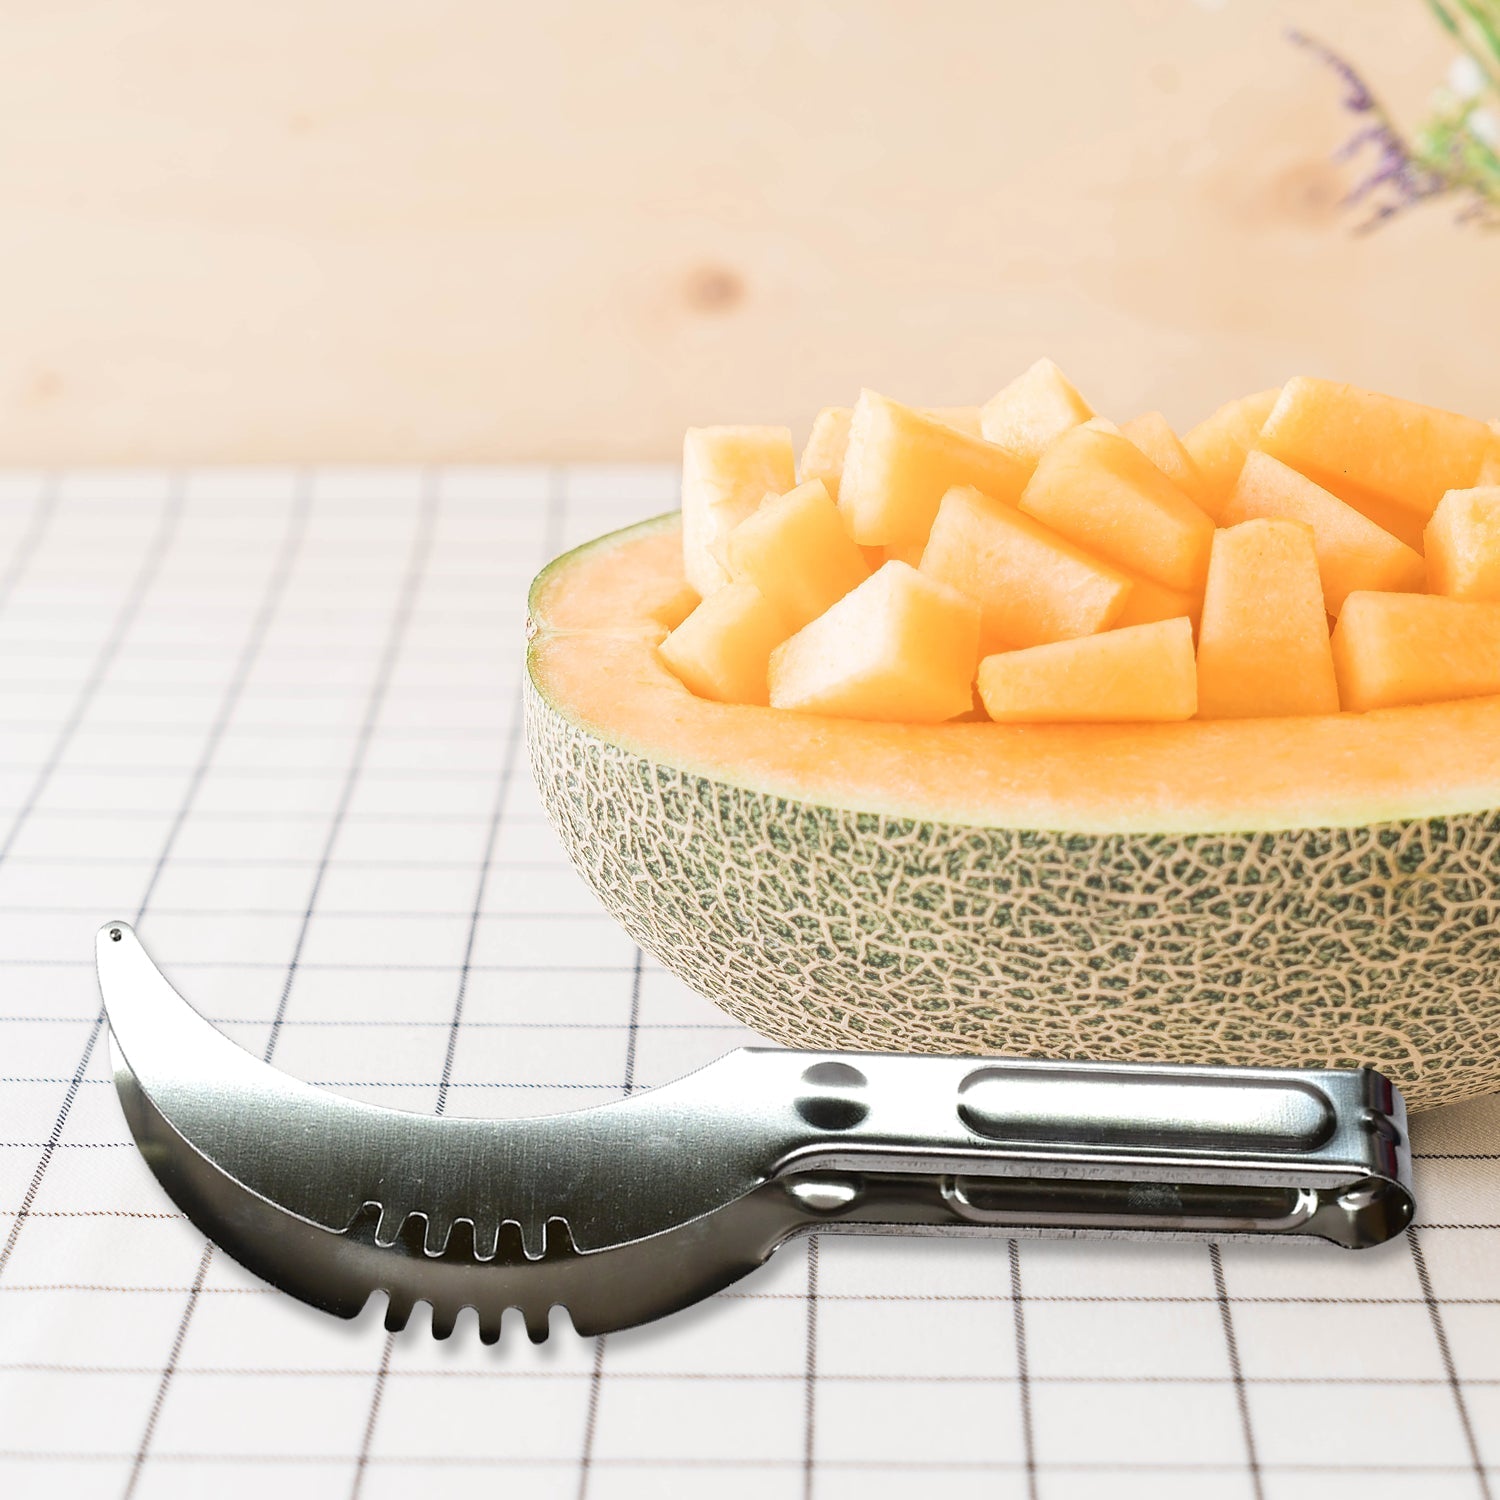 2981 Watermelon Cantaloupe Slicer Stainless Steel Knife Corer Fruit Vegetable - Tools Kitchen Gadgets Melon Slicer Cutter Melon Fruit DeoDap